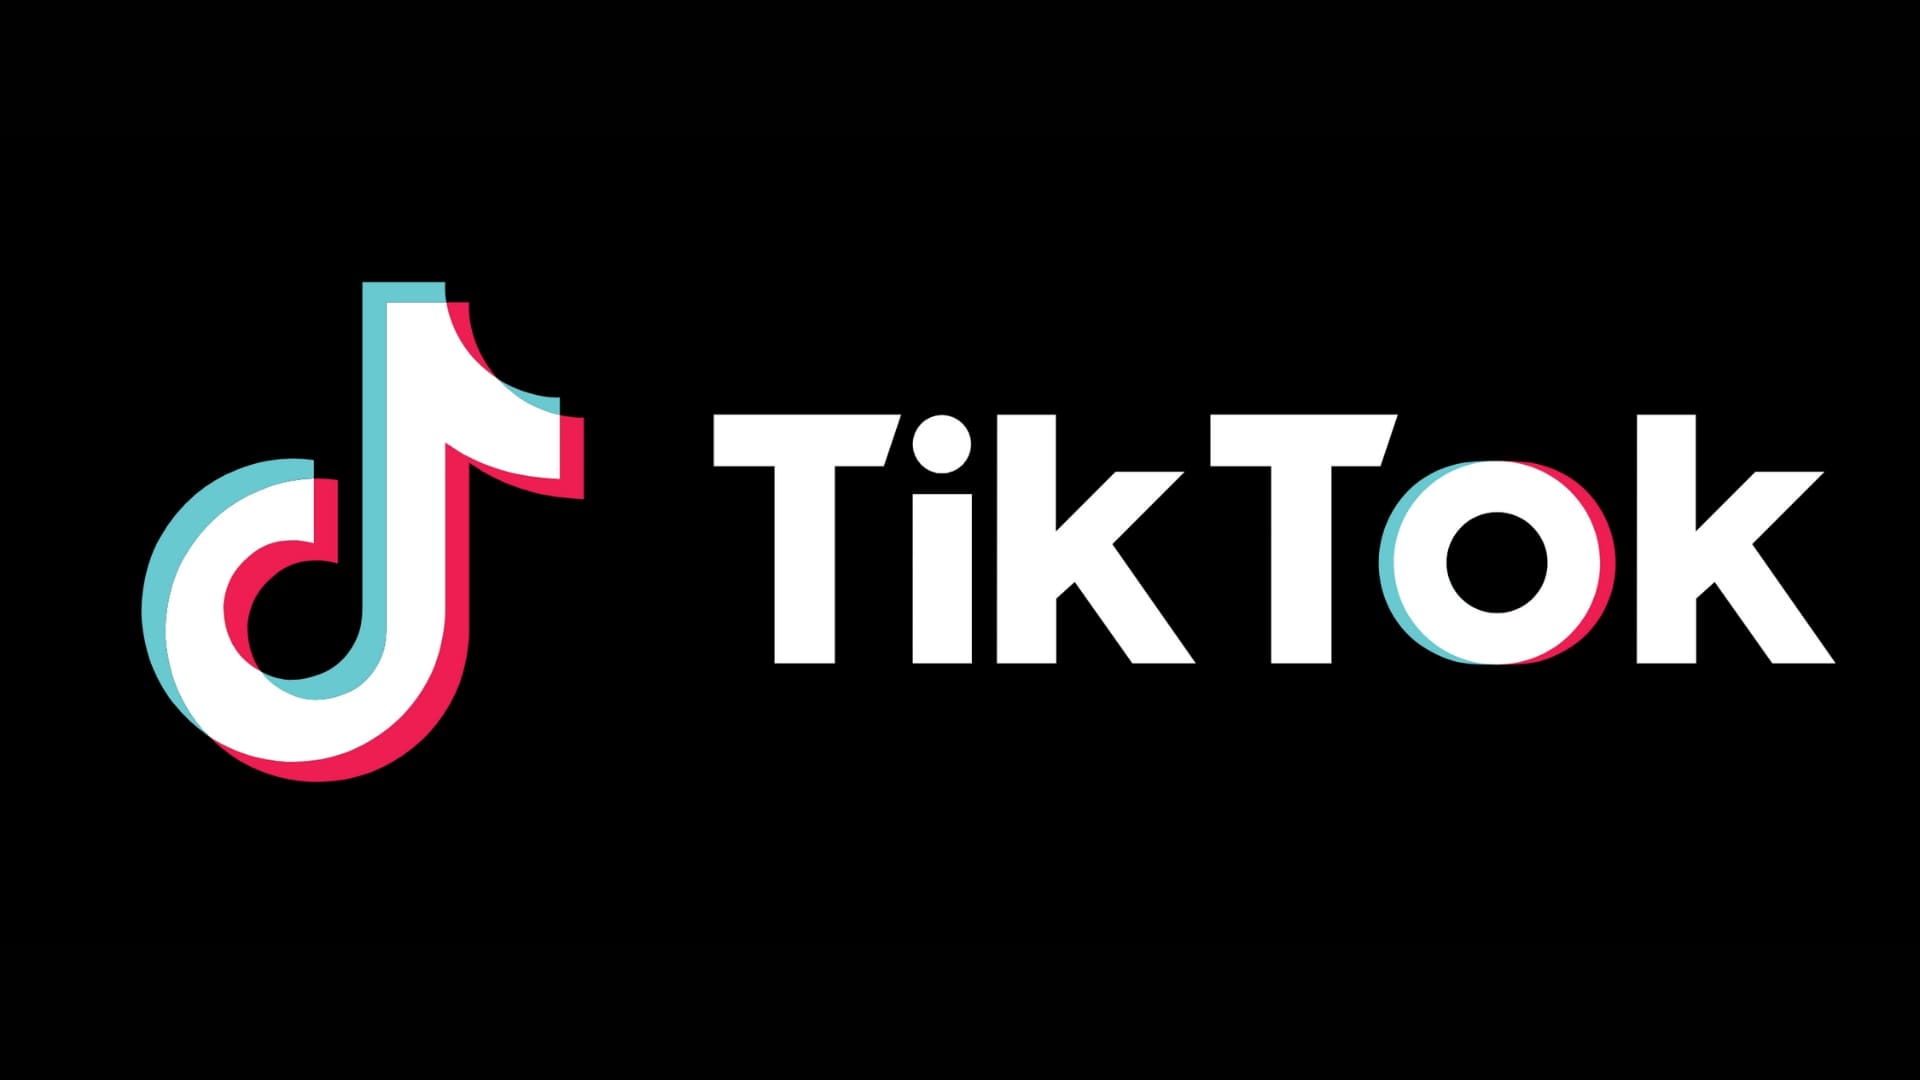 Tiktok wallpaper HD free Tiktok background